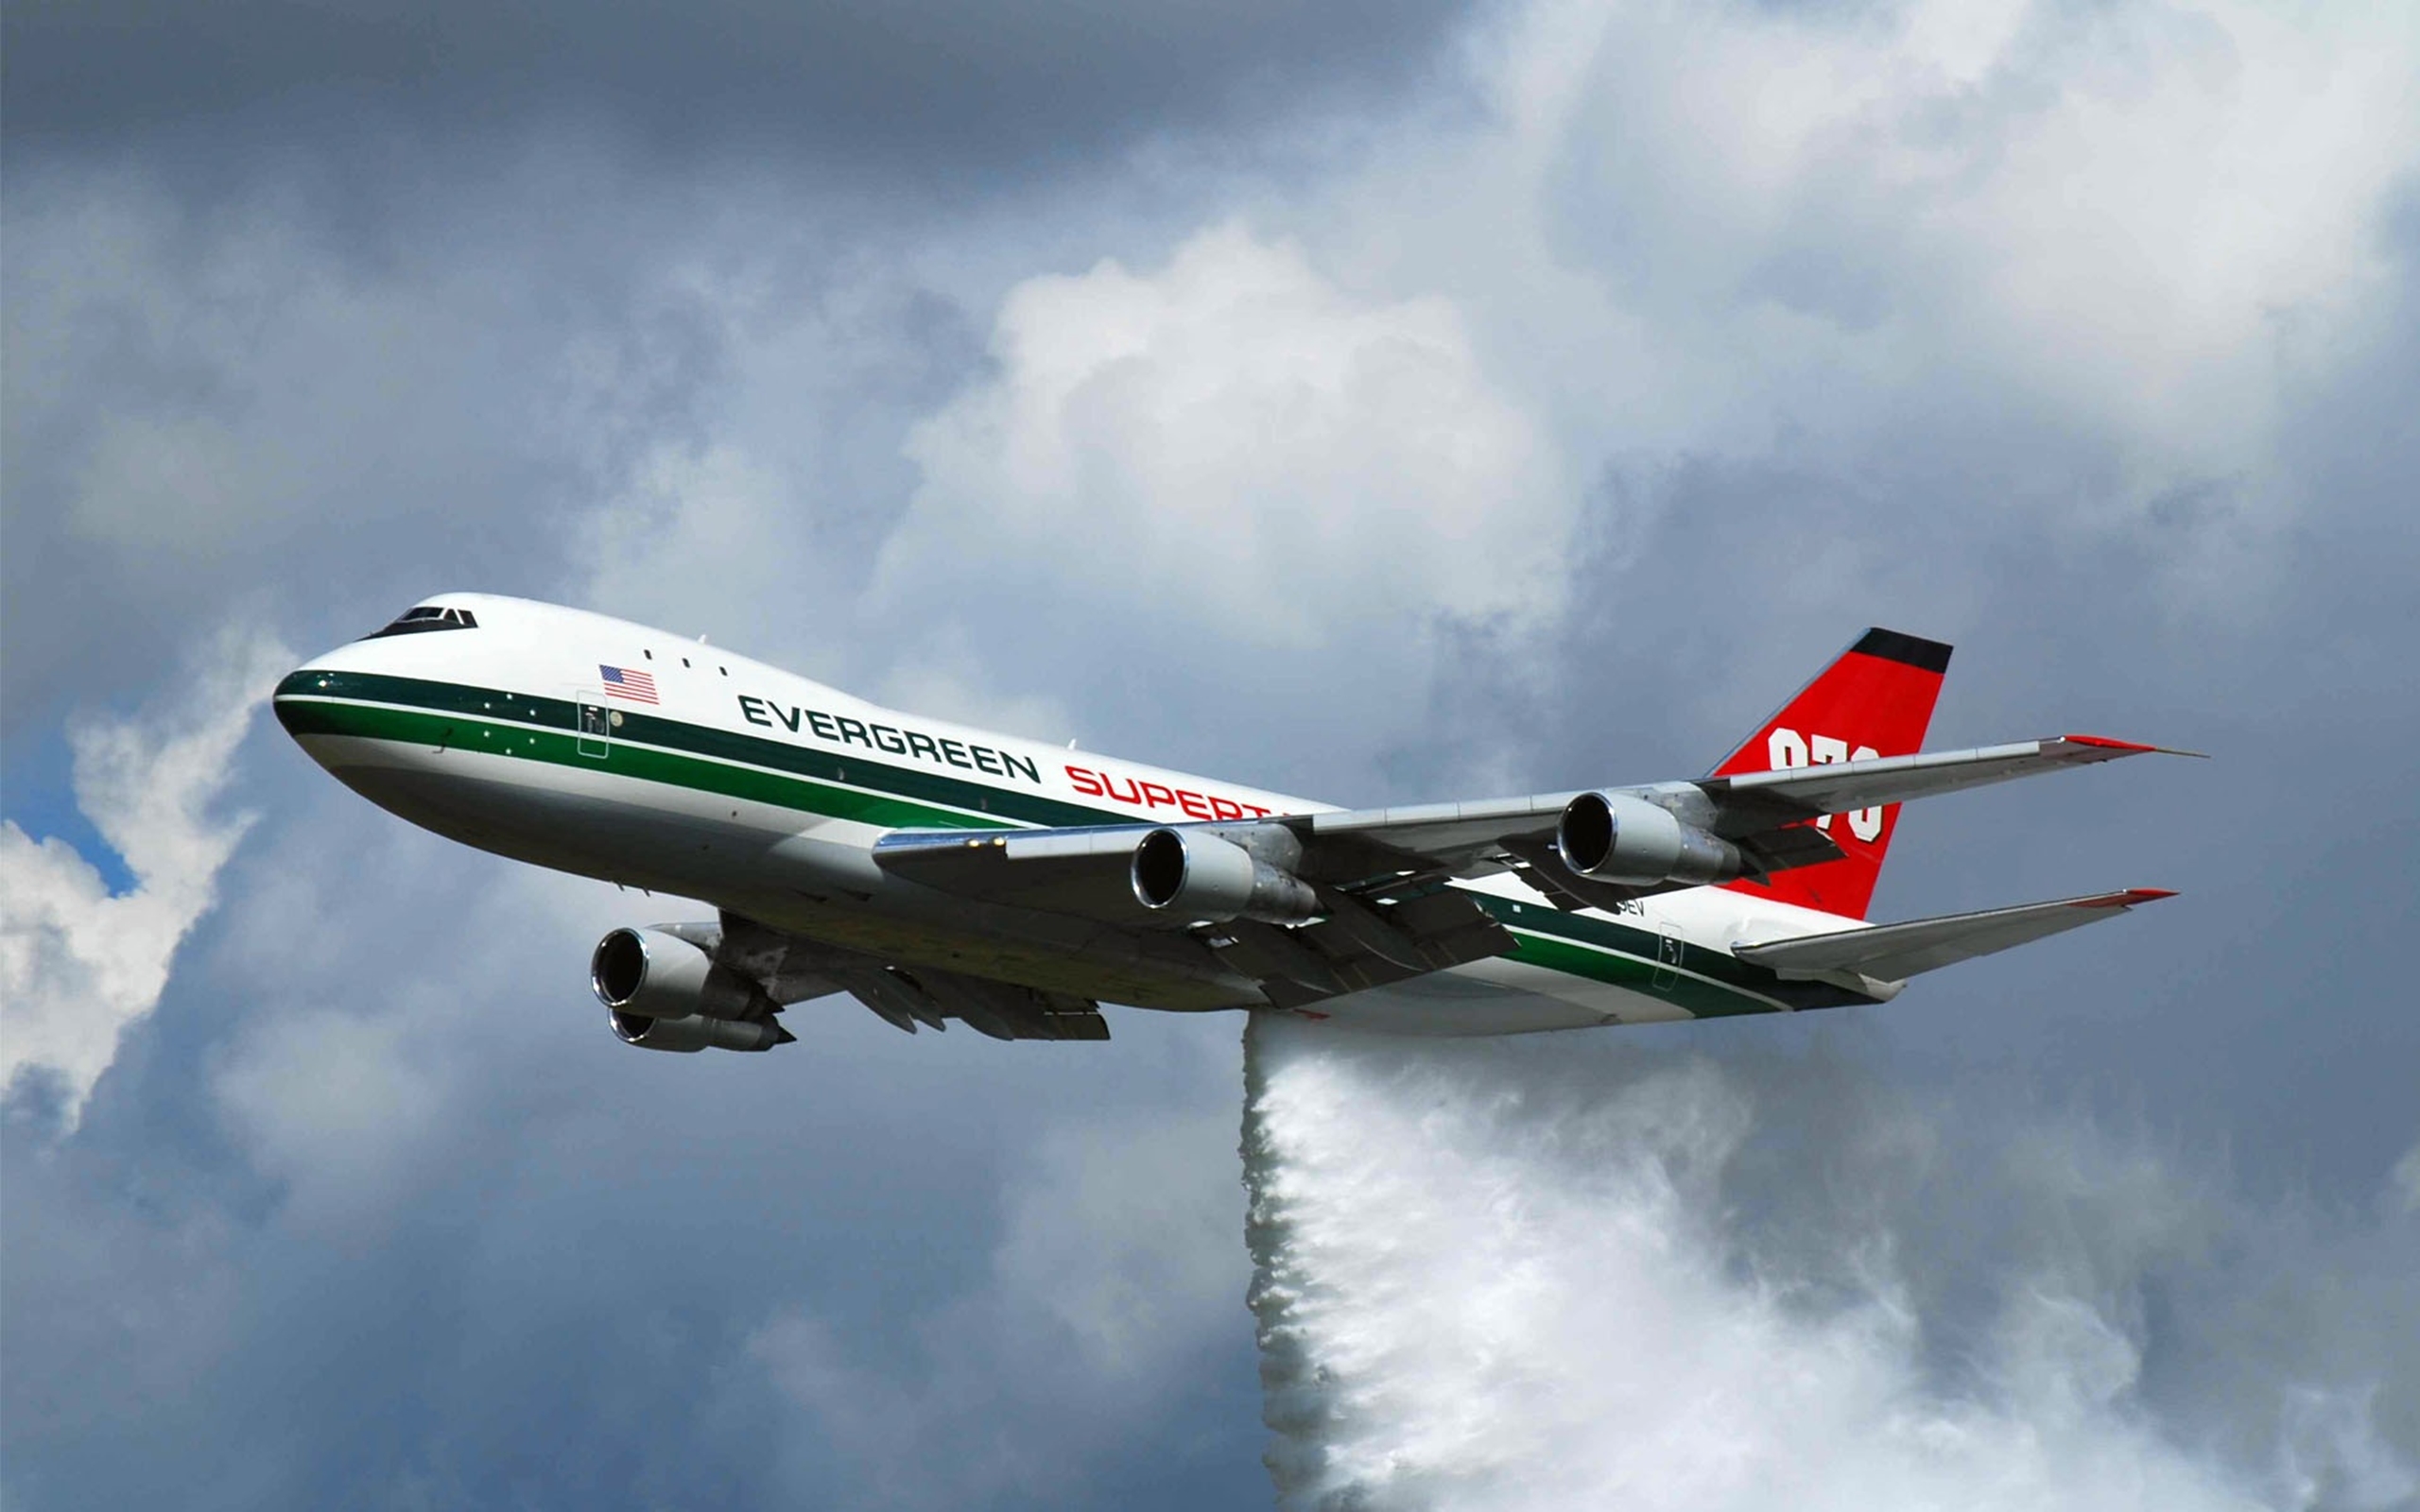 Evergreen 747 Supertanker flying over a forest fire.